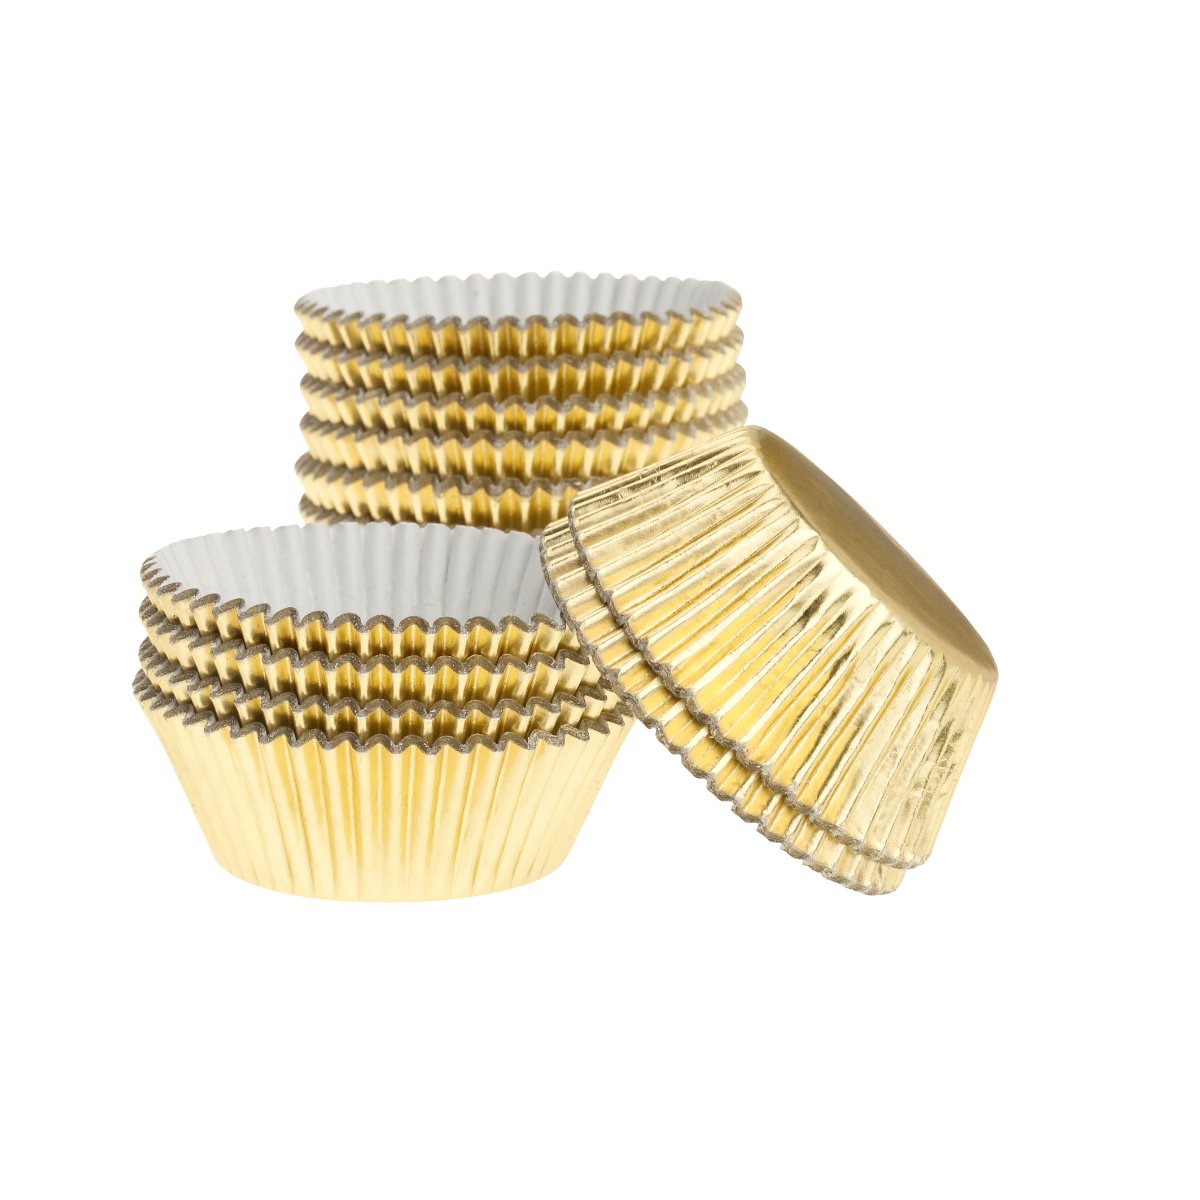 Wilton Standard Baking Cups - Gold Foil - 24/Pkg